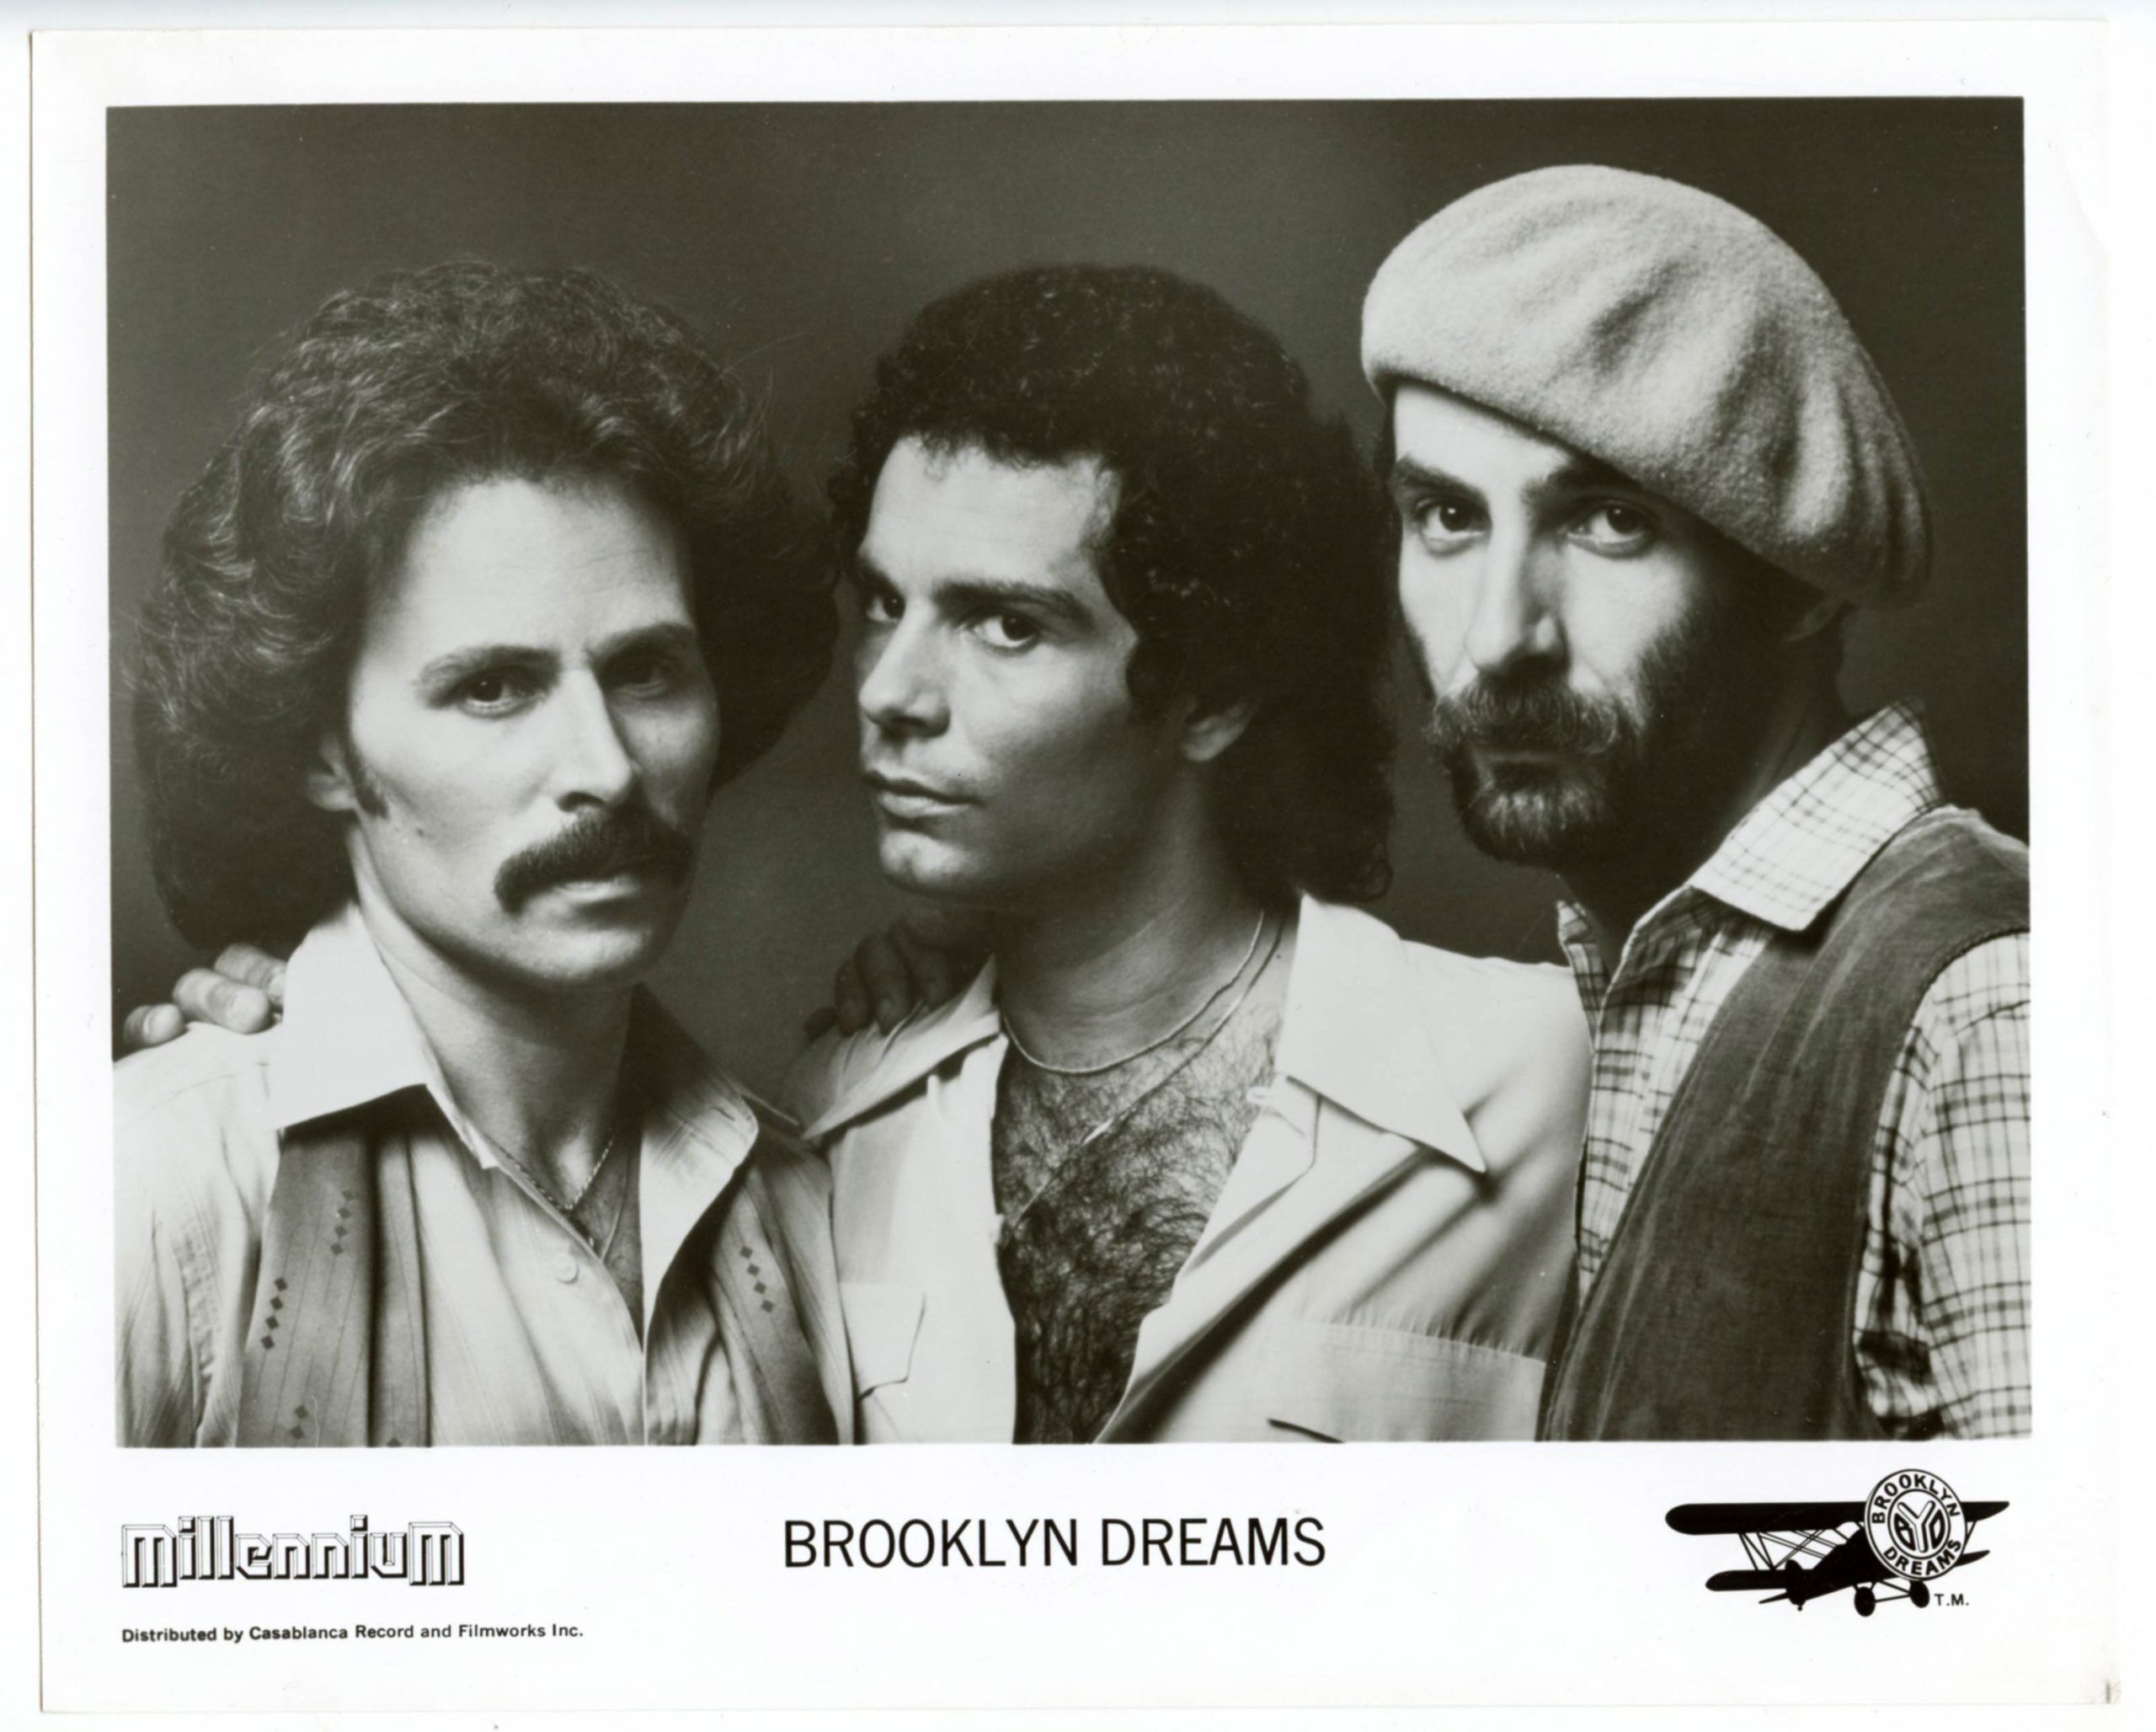 Brooklyn Dreams Photo 1980s Millennium Records